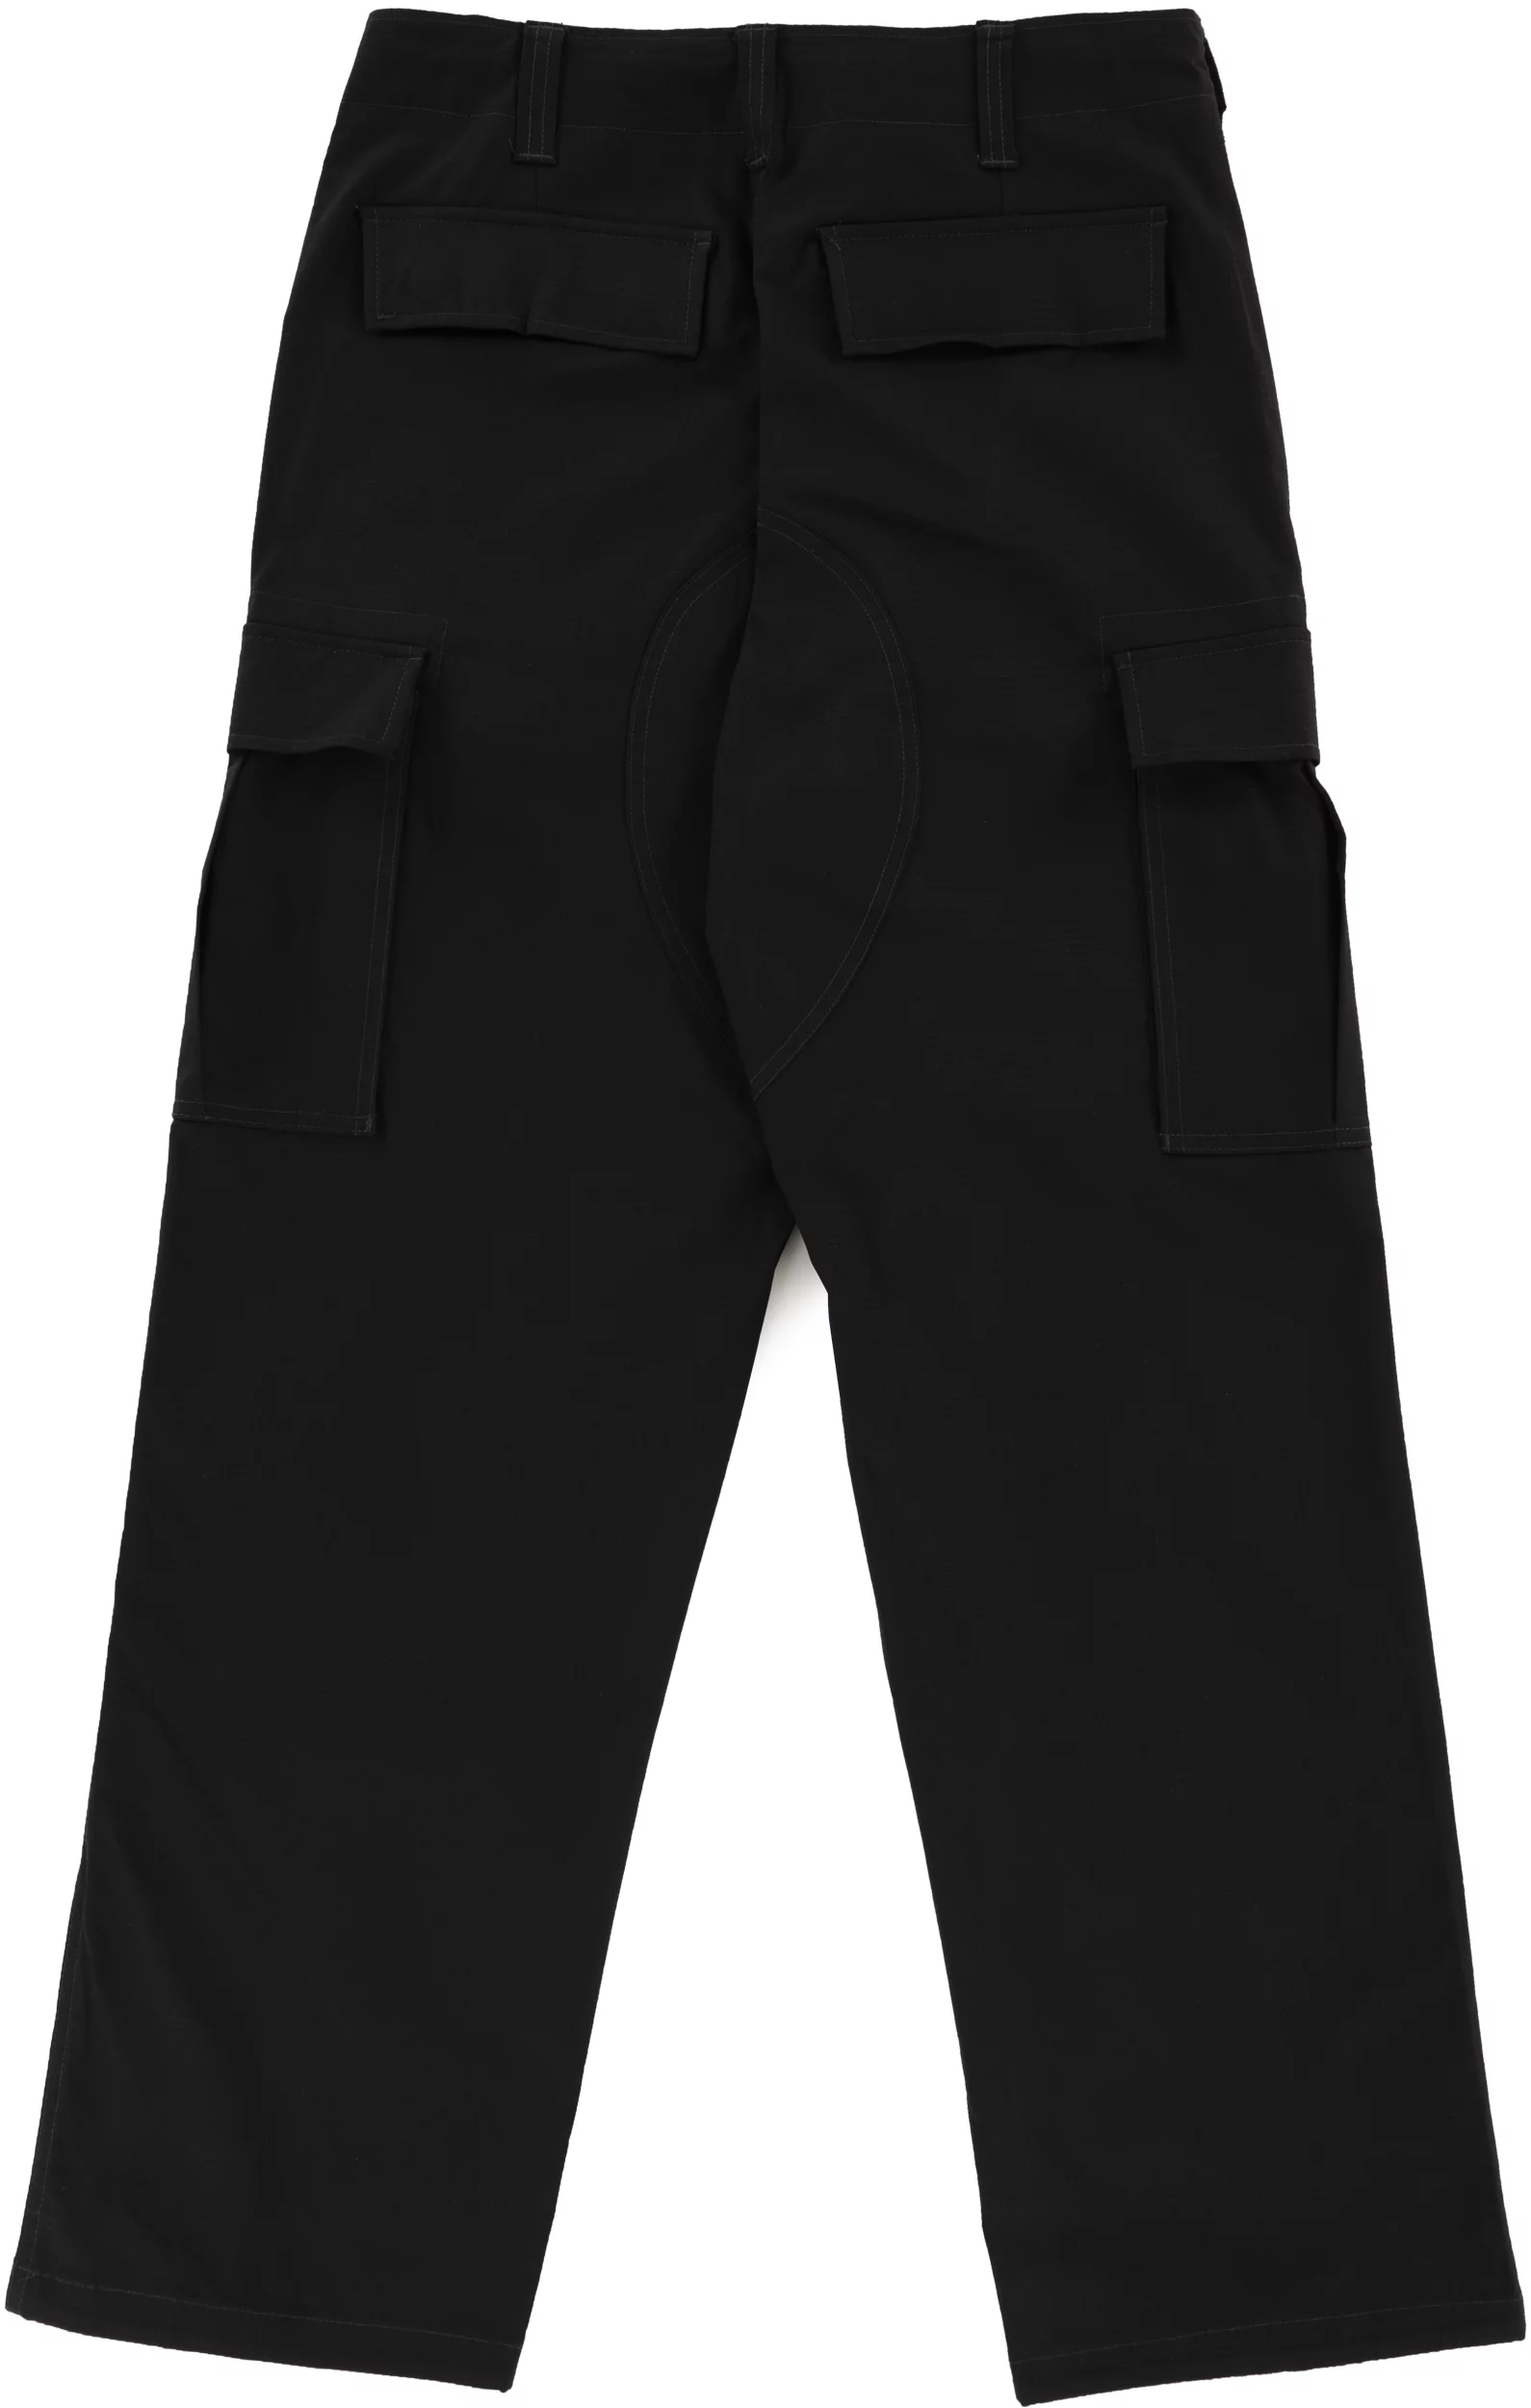 Nike Sb Chino Skate Pants BLACK  Clothes \ Pants Brands \ Nike SB